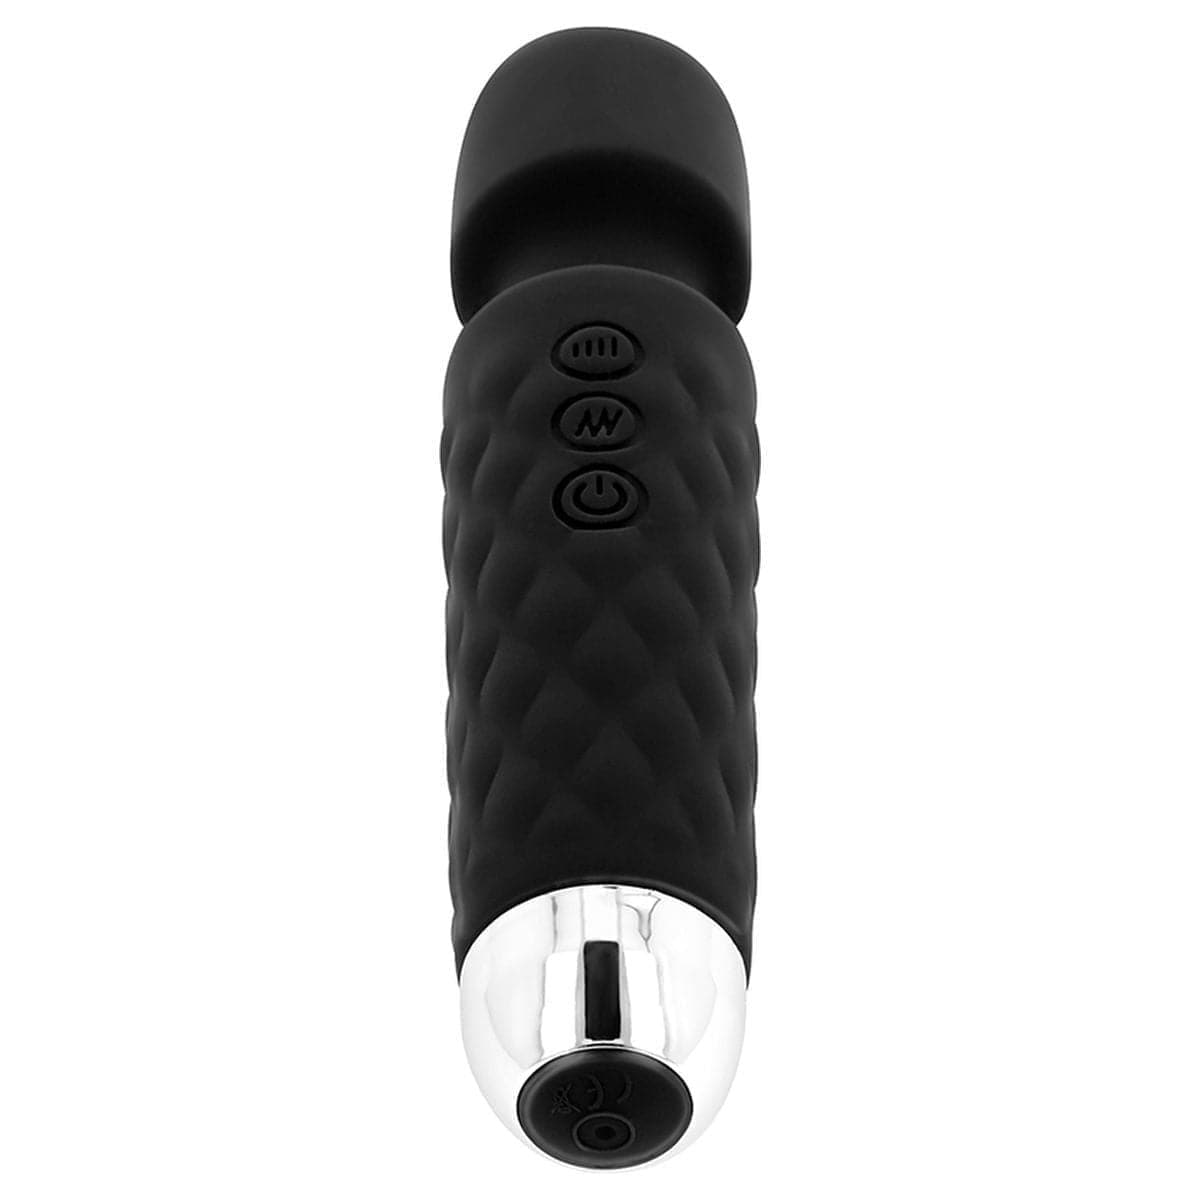 Massajador Ohmama! USB Preto, 20cm Ø3.8cm, 10vibrações - Pérola SexShop